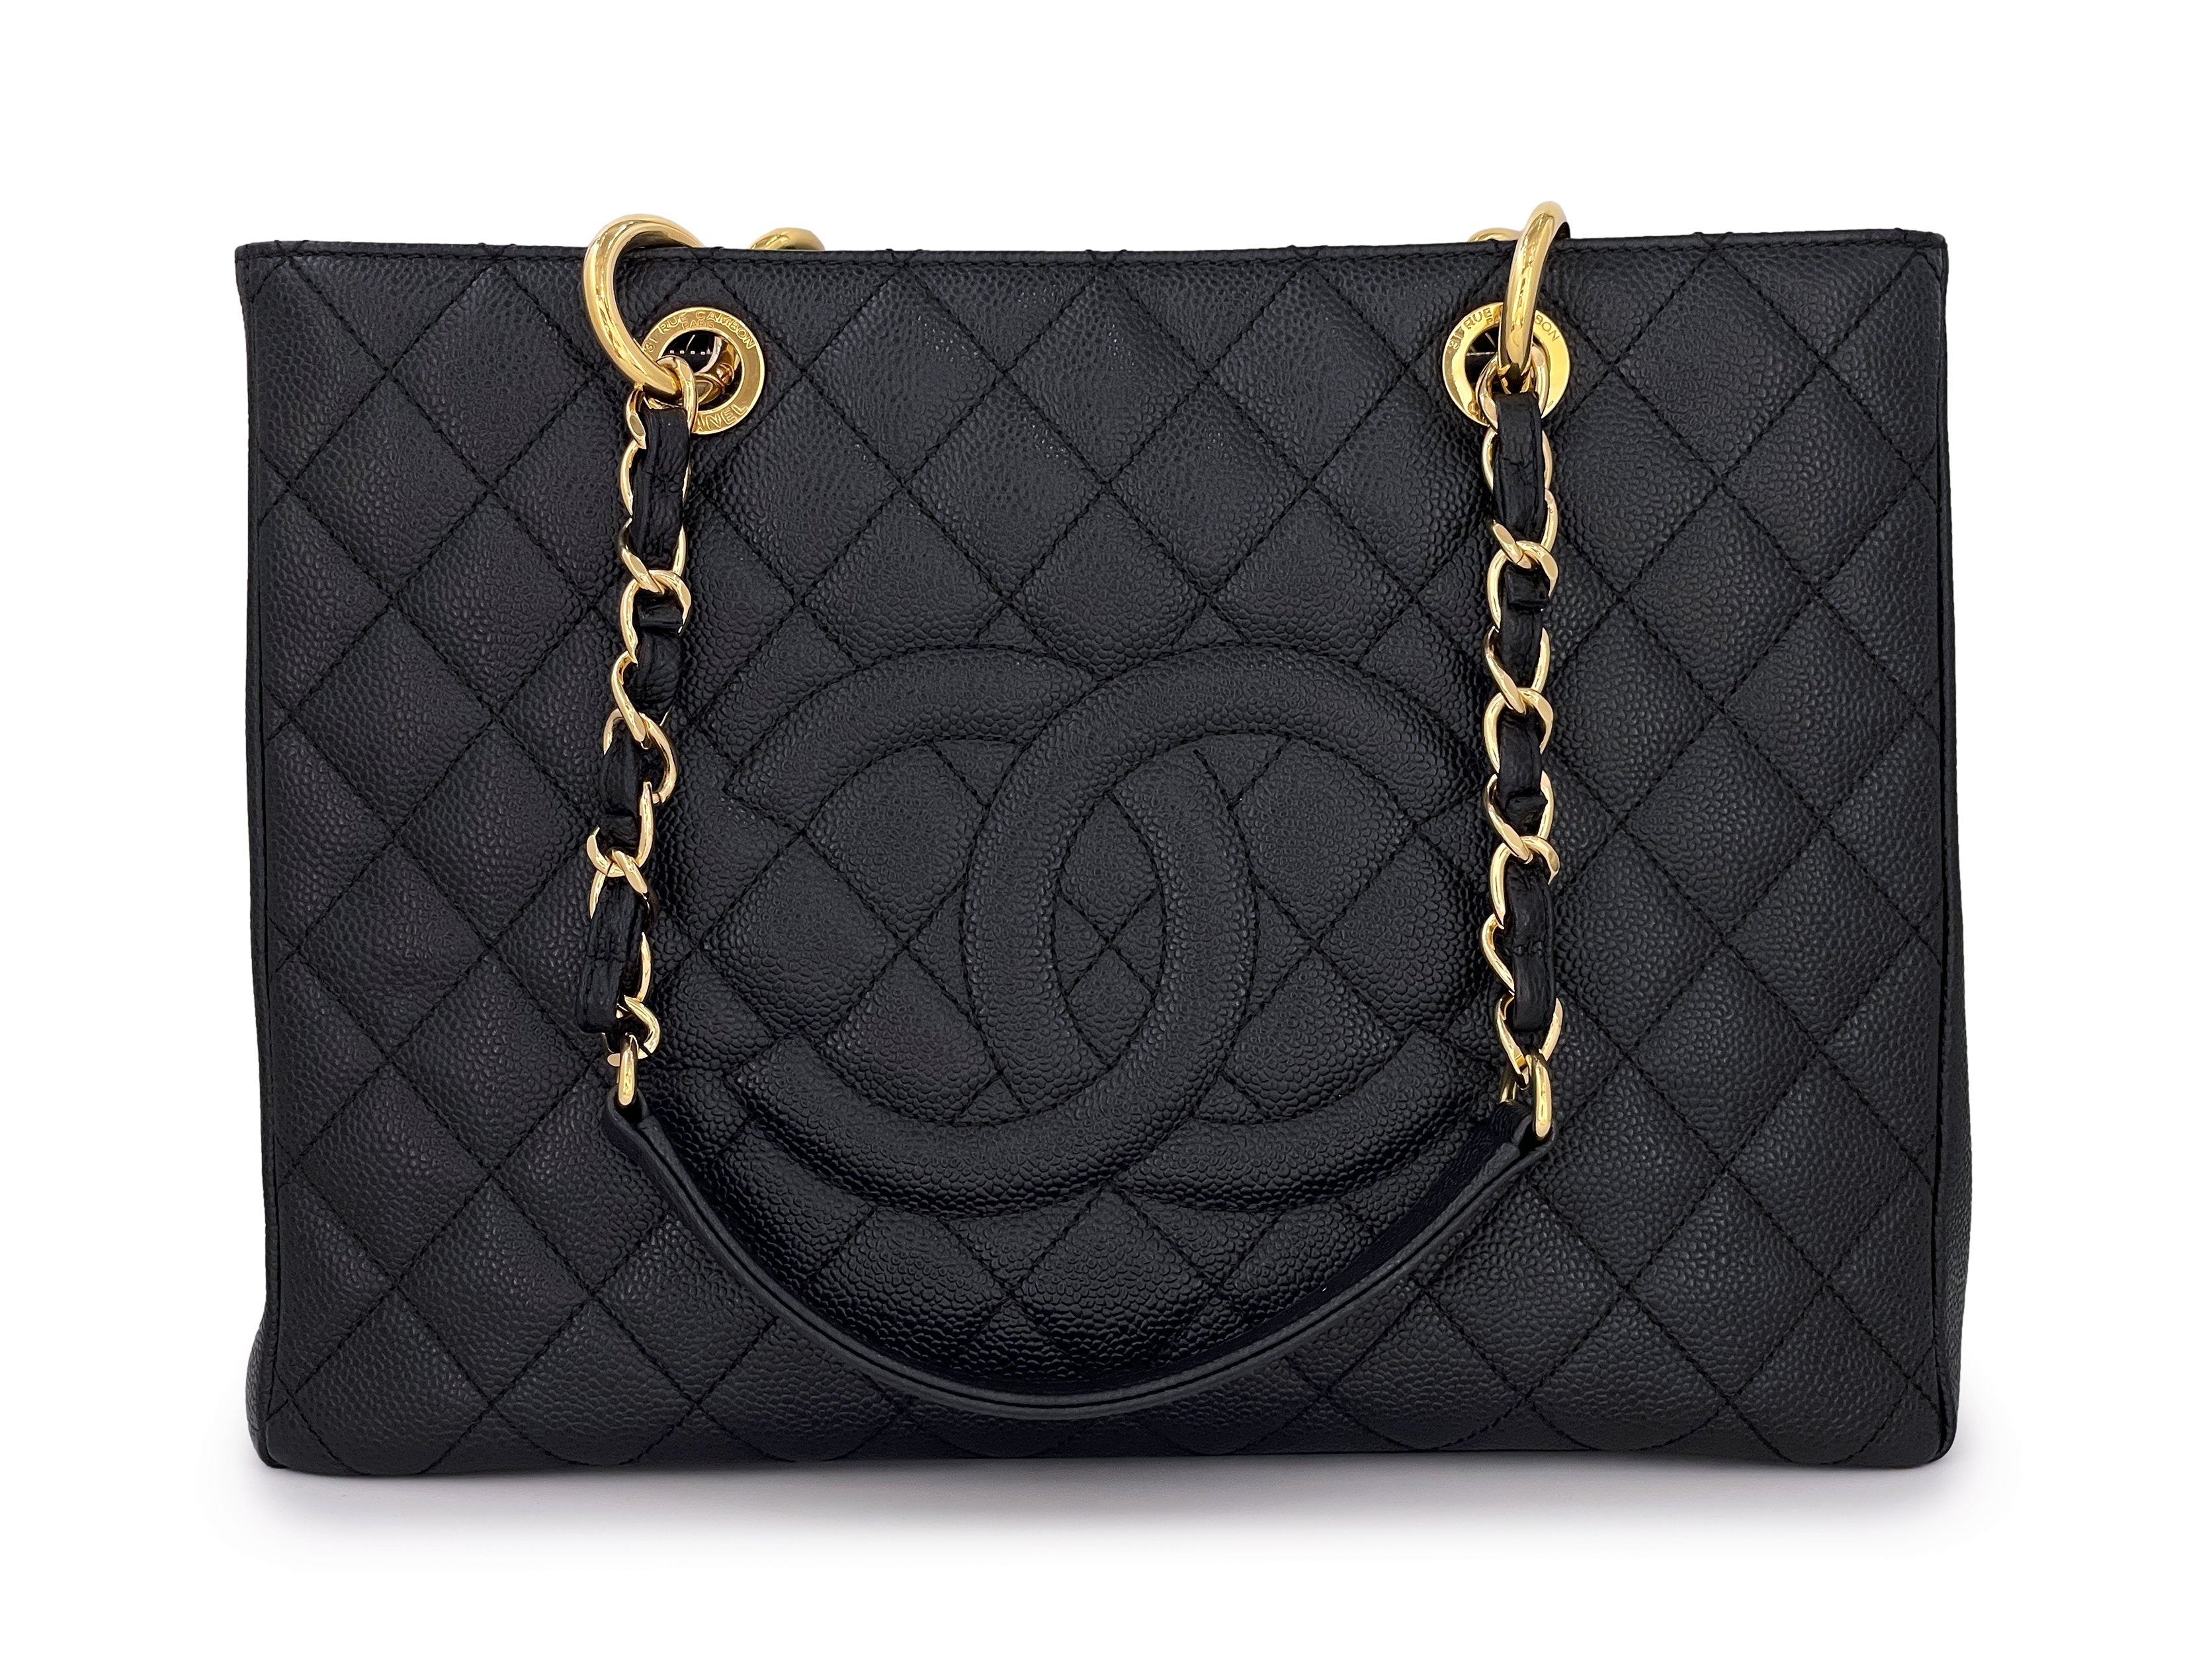 ViaAnabel - Chanel Black Caviar Grand Shopping Tote Bag GST Retail